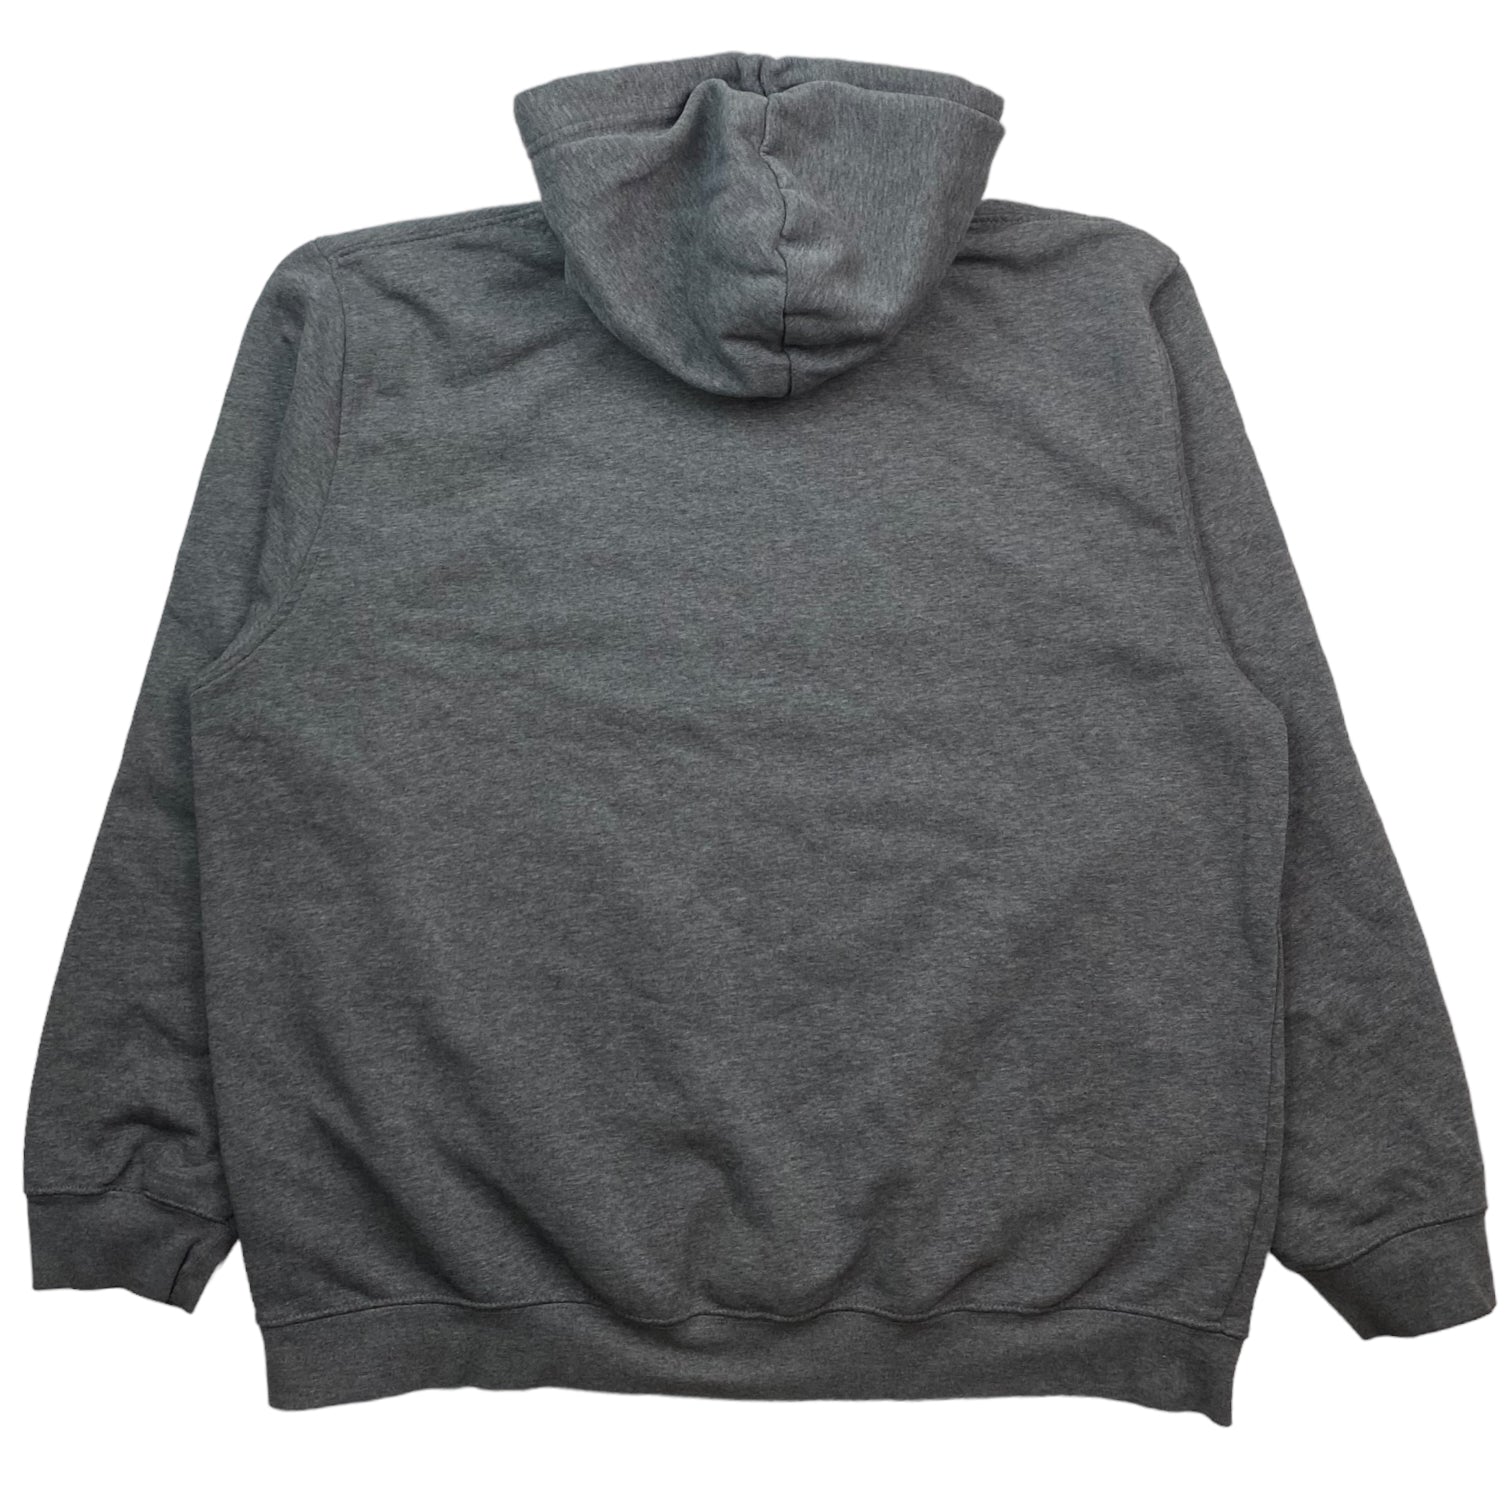 Nike mini swoosh quarter zip sweatshirt in grey and sail